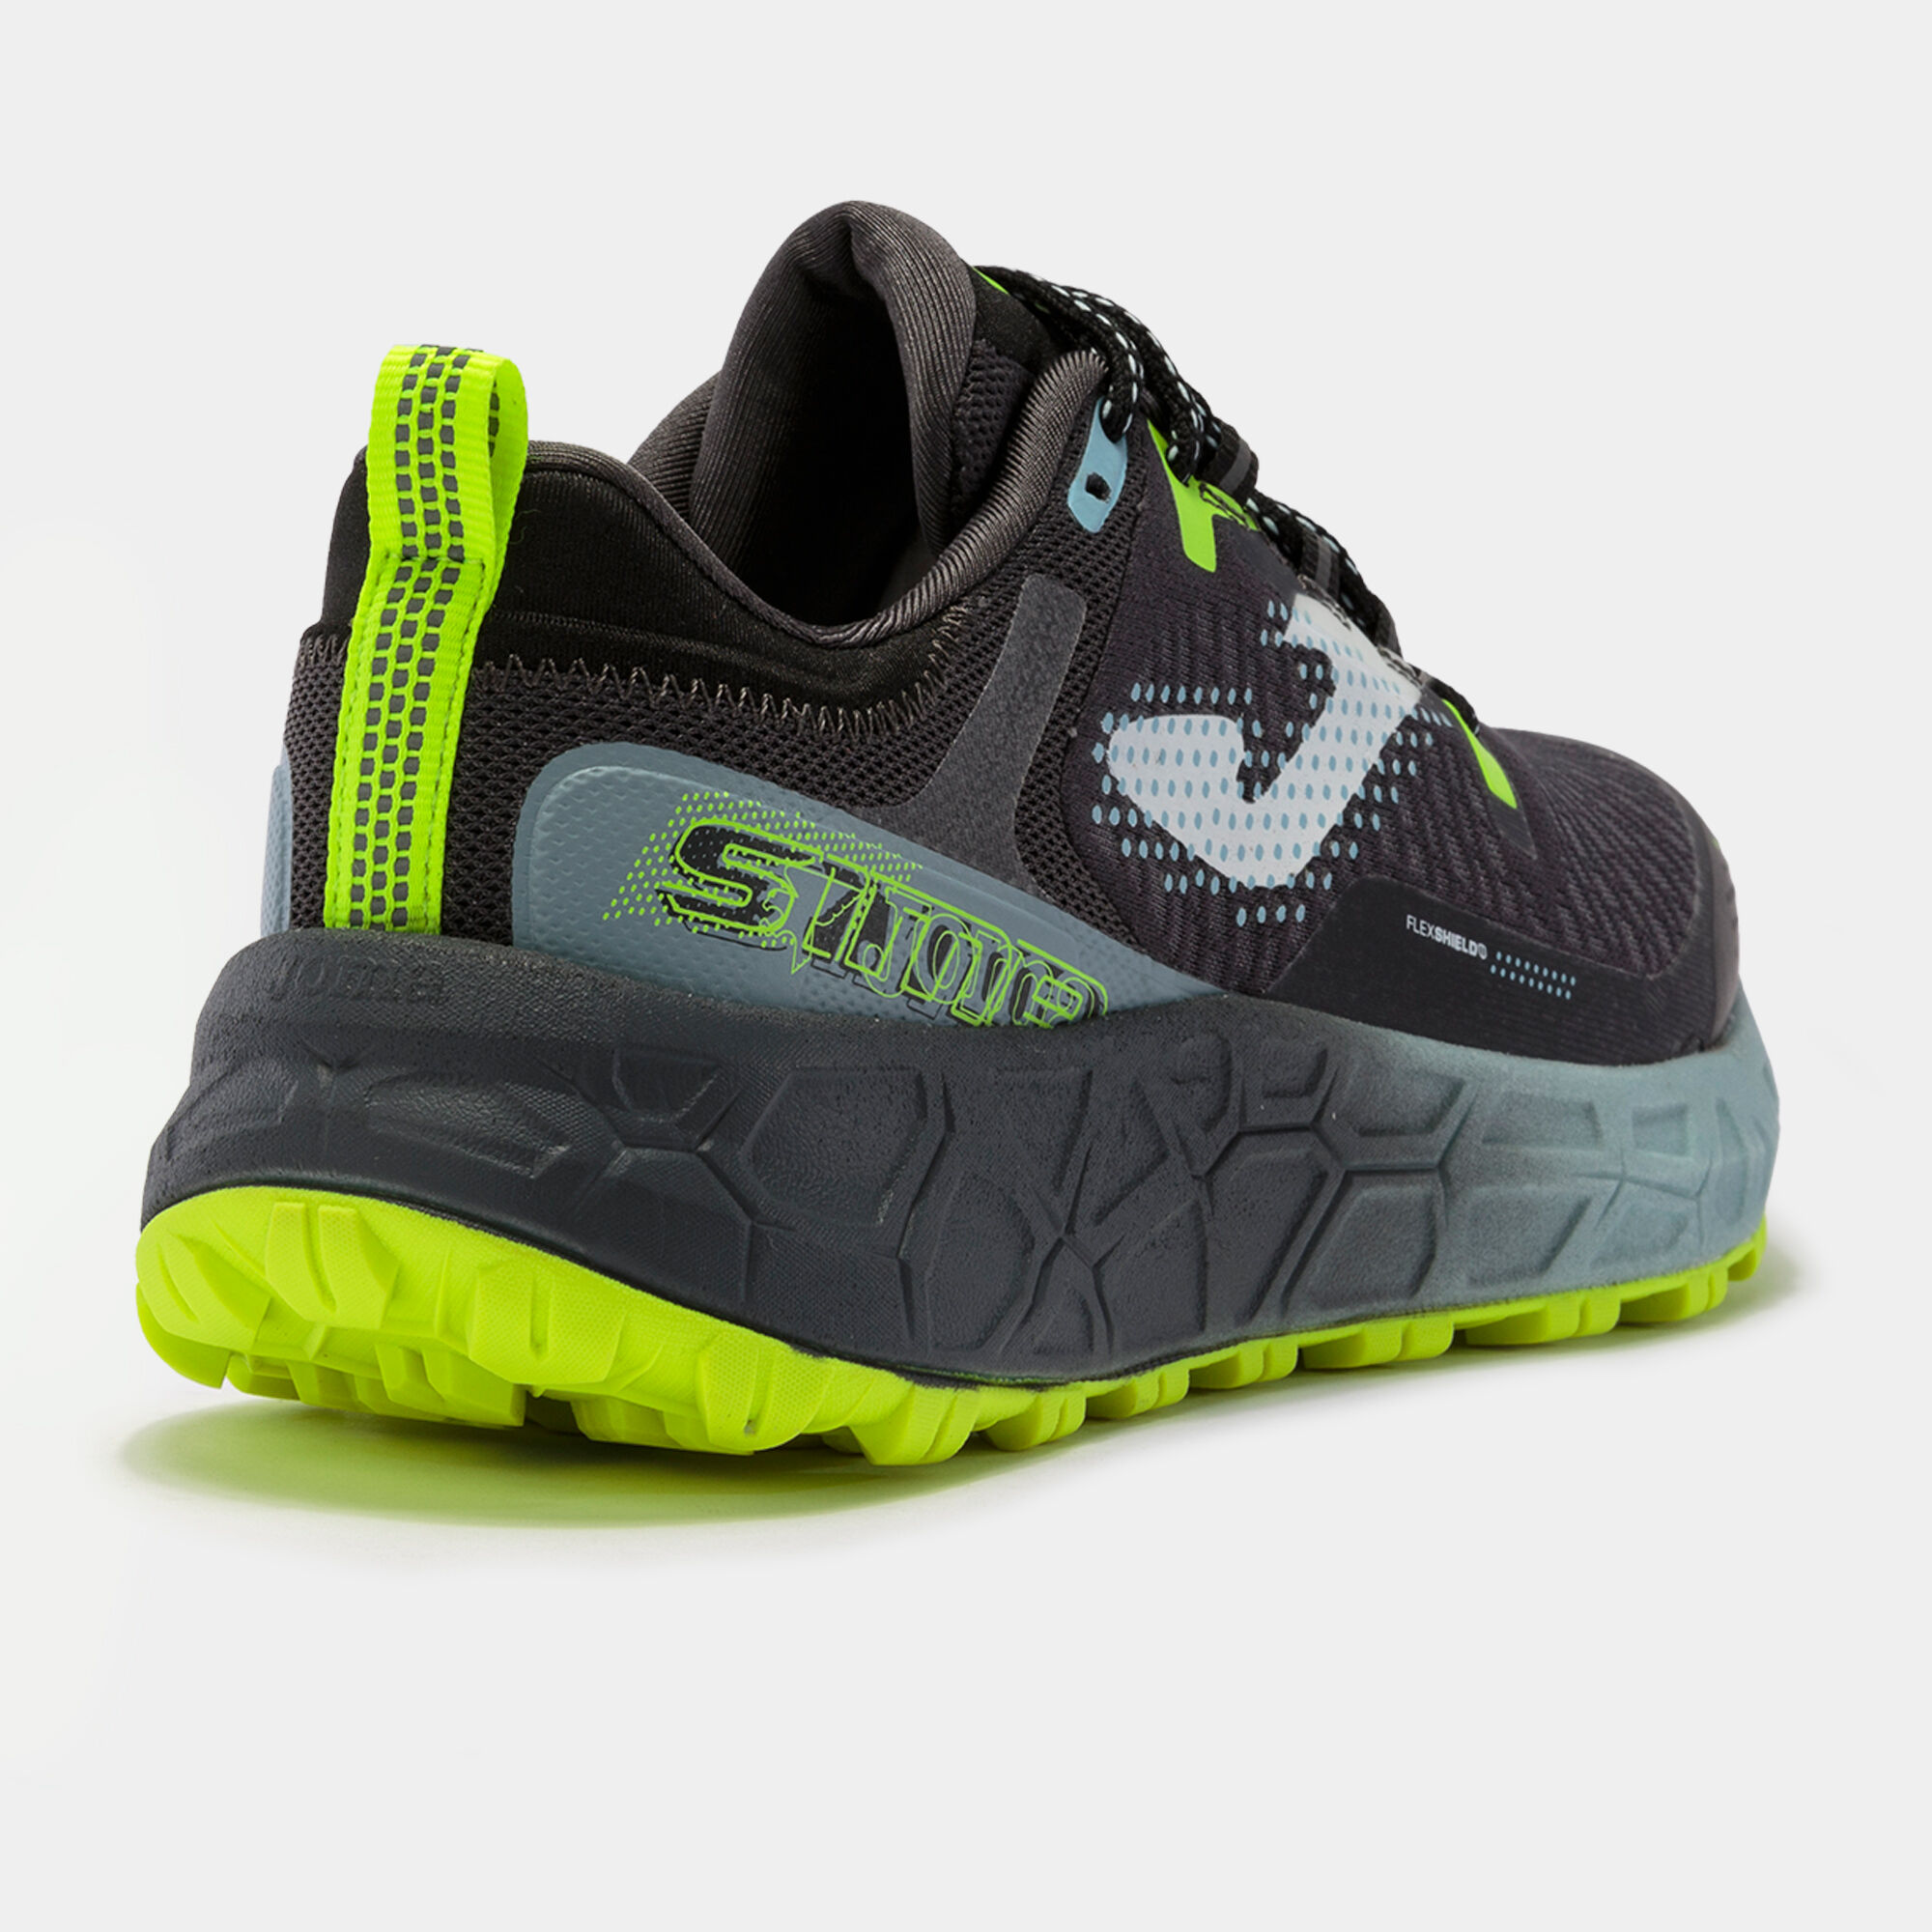 Cuando Distribuir Cuaderno Trail-running shoes Sima 22 man black fluorescent yellow